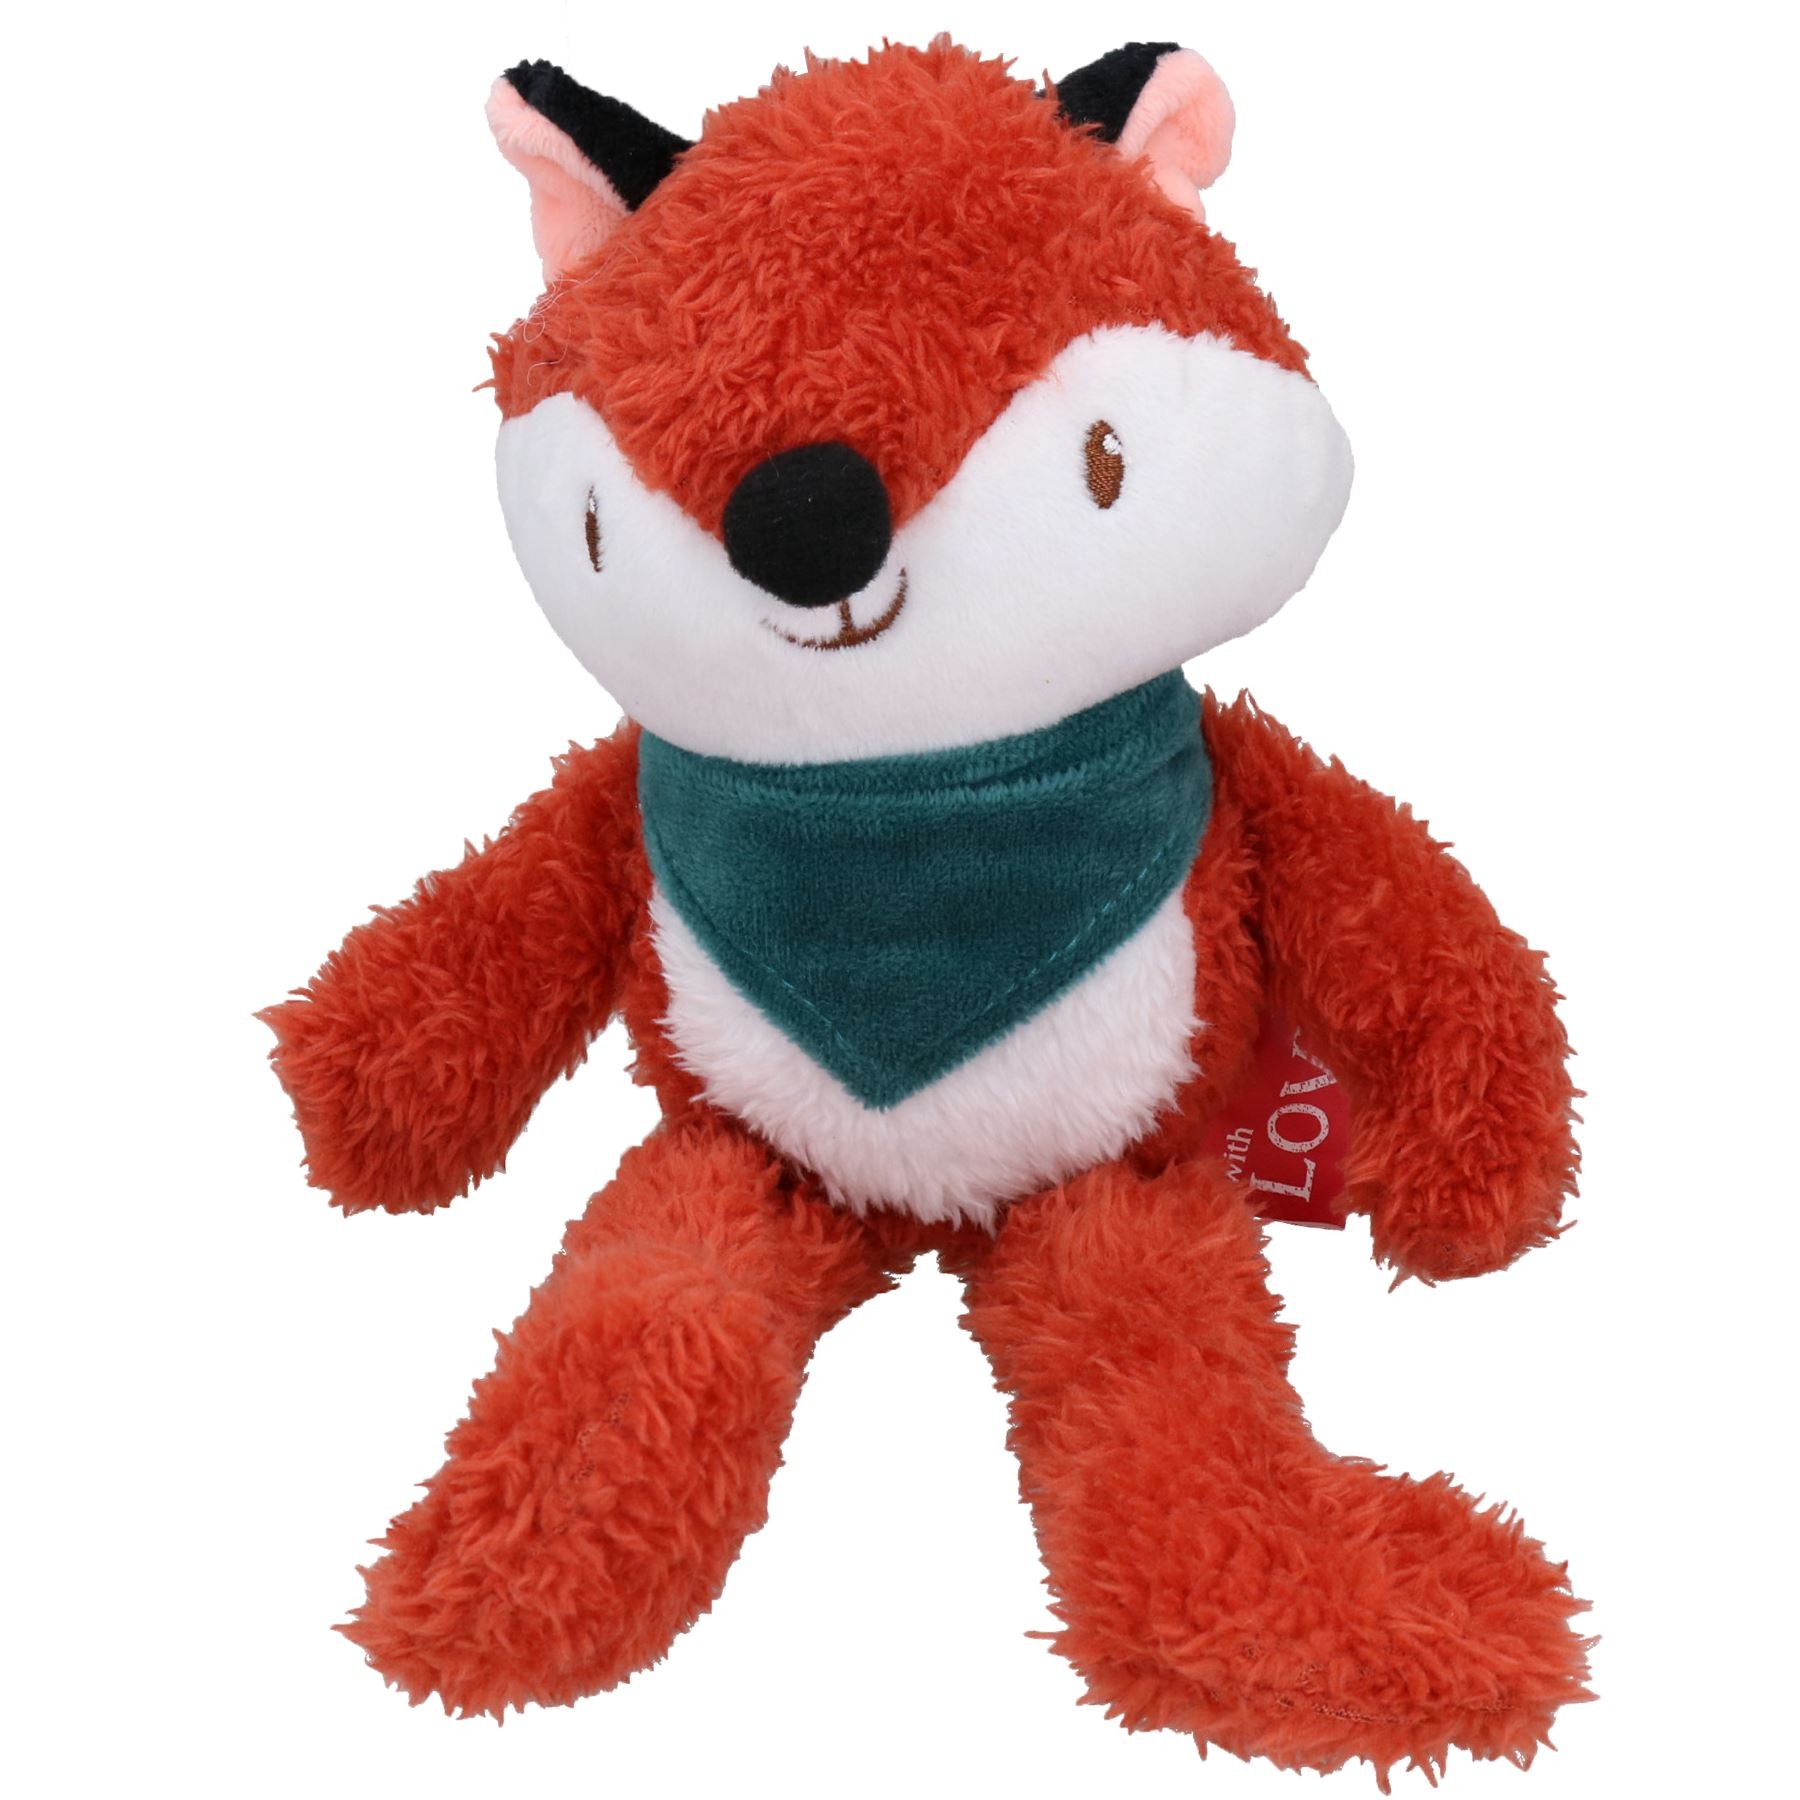 Small Dog Christmas Gift Bandana Buddy Fox Squeak Plush Play Toy Xmas Present